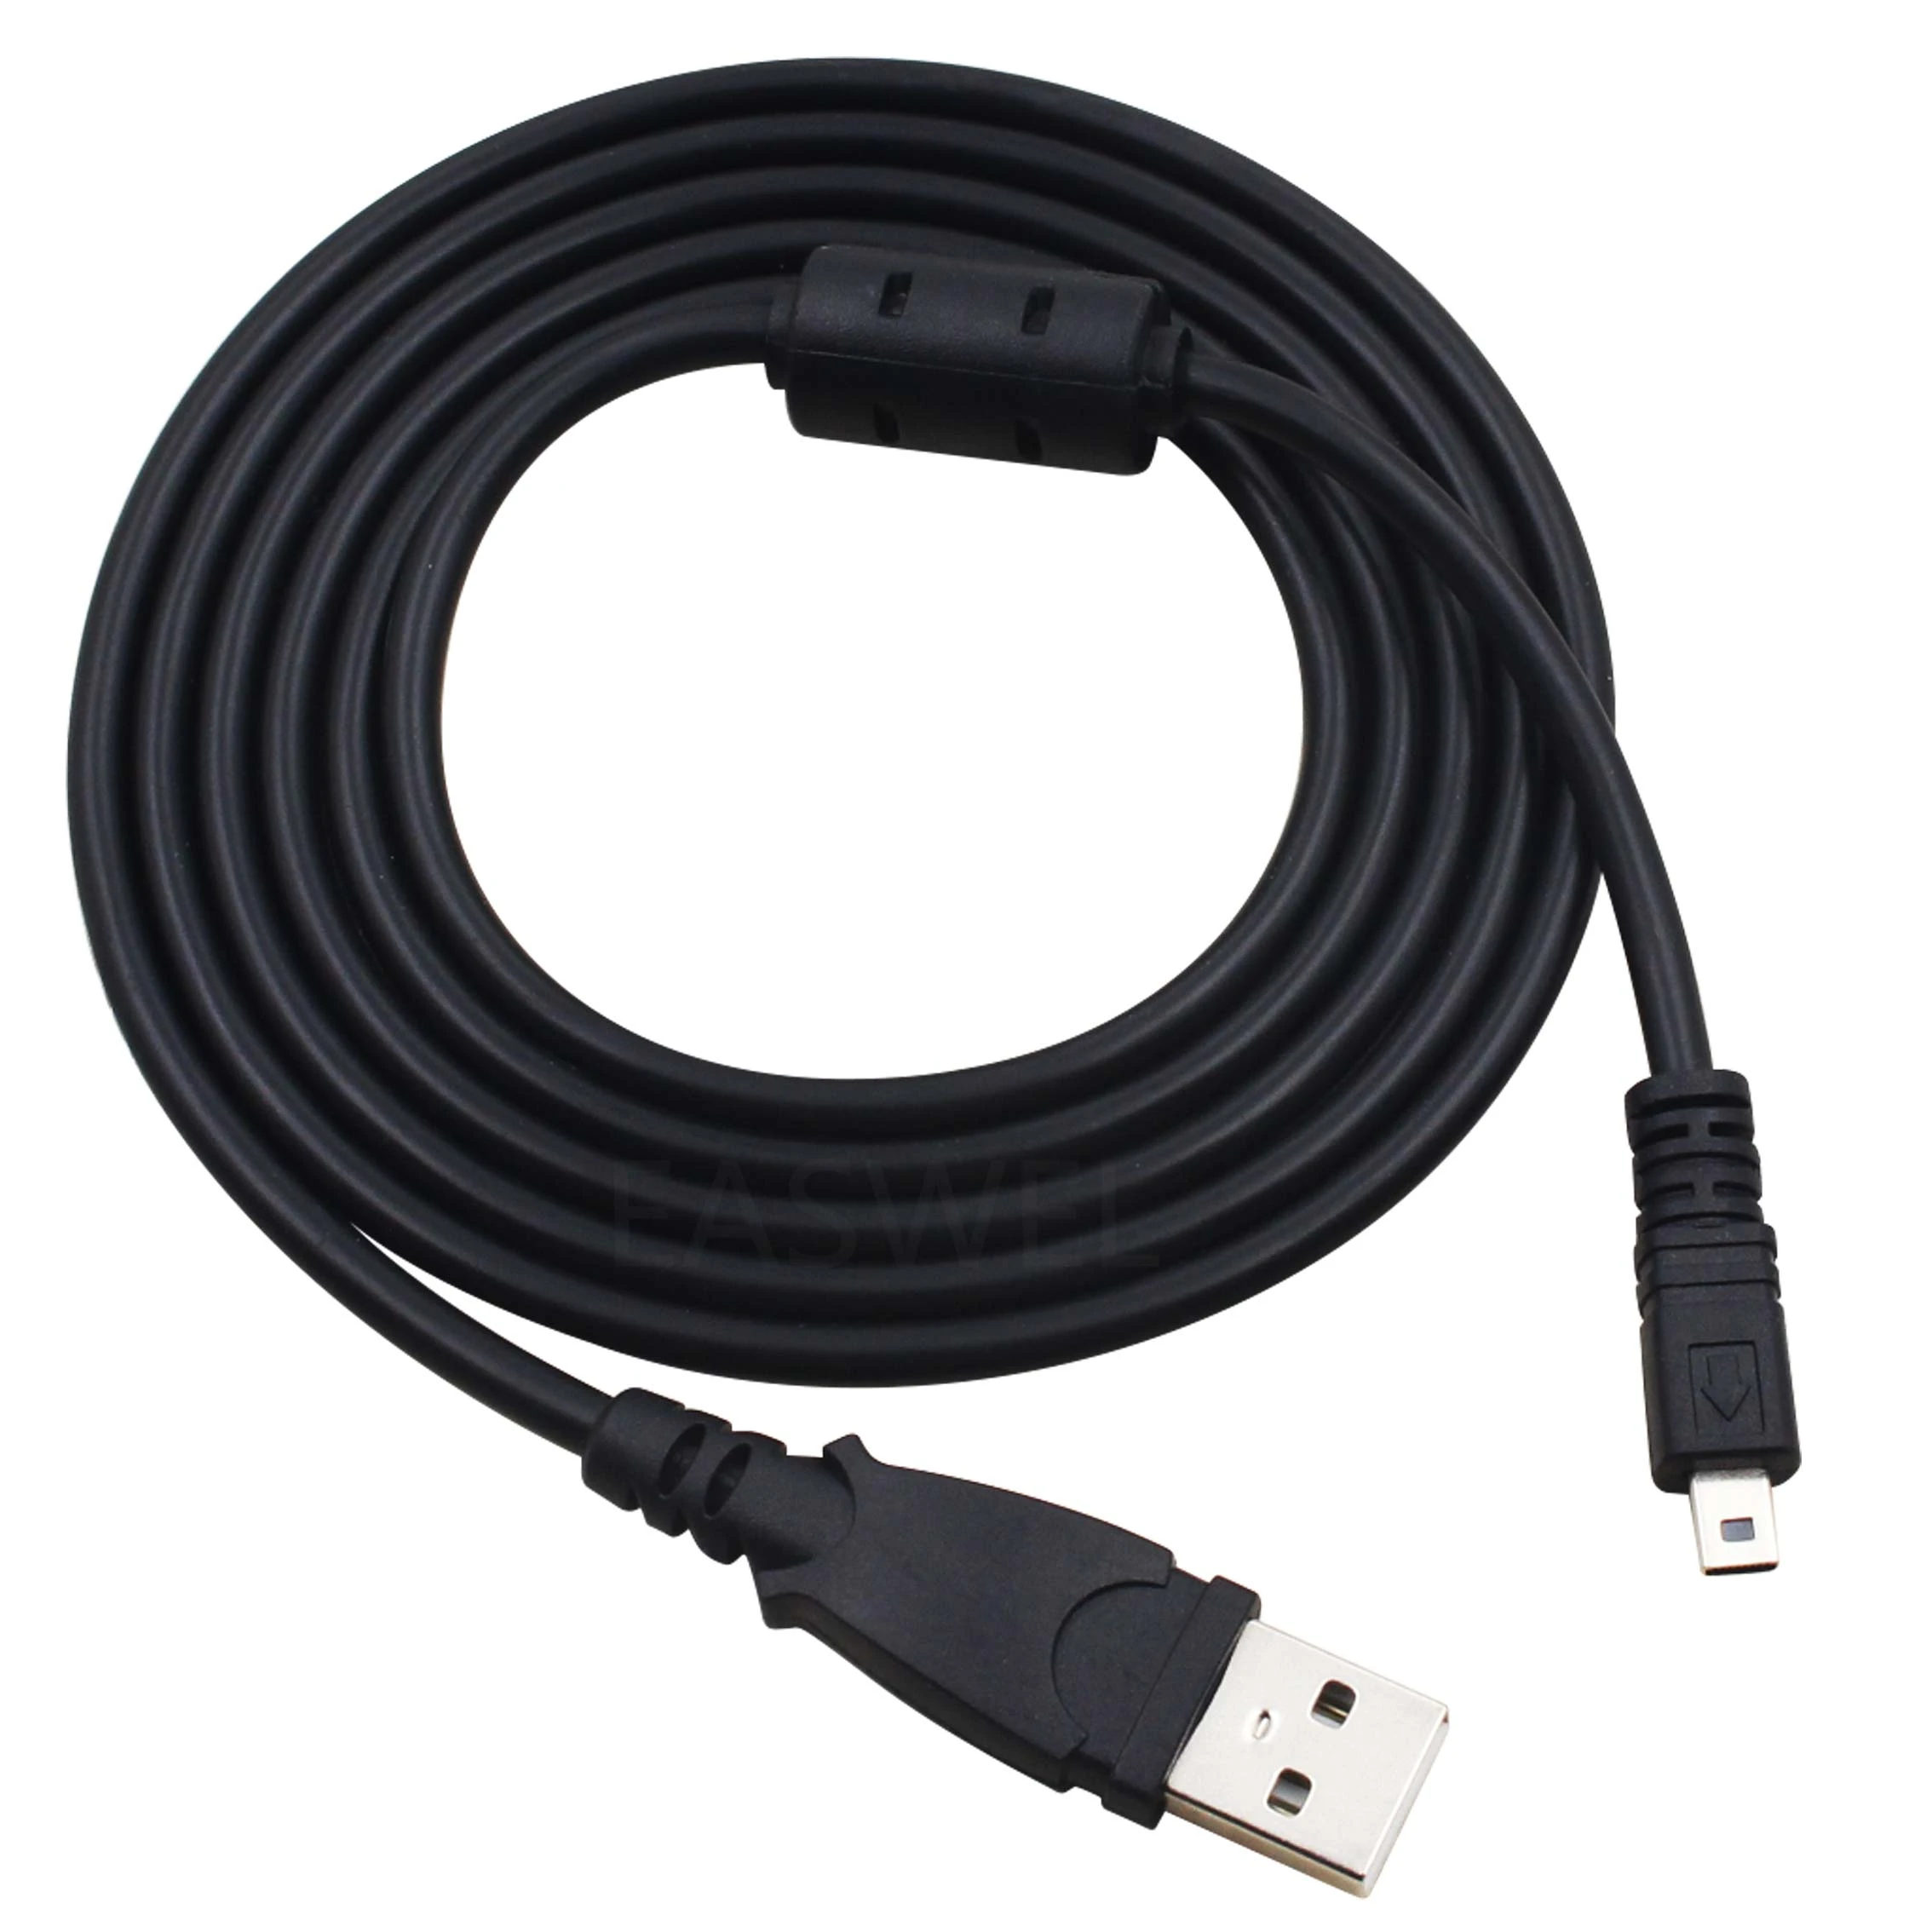 zuurgraad Onvervangbaar Scheiding USB Charger Data SYNC Cable Cord For Panasonic Lumix DMC FZ300 DMC Fz72 DMC  TZ71|Data Cables| - AliExpress